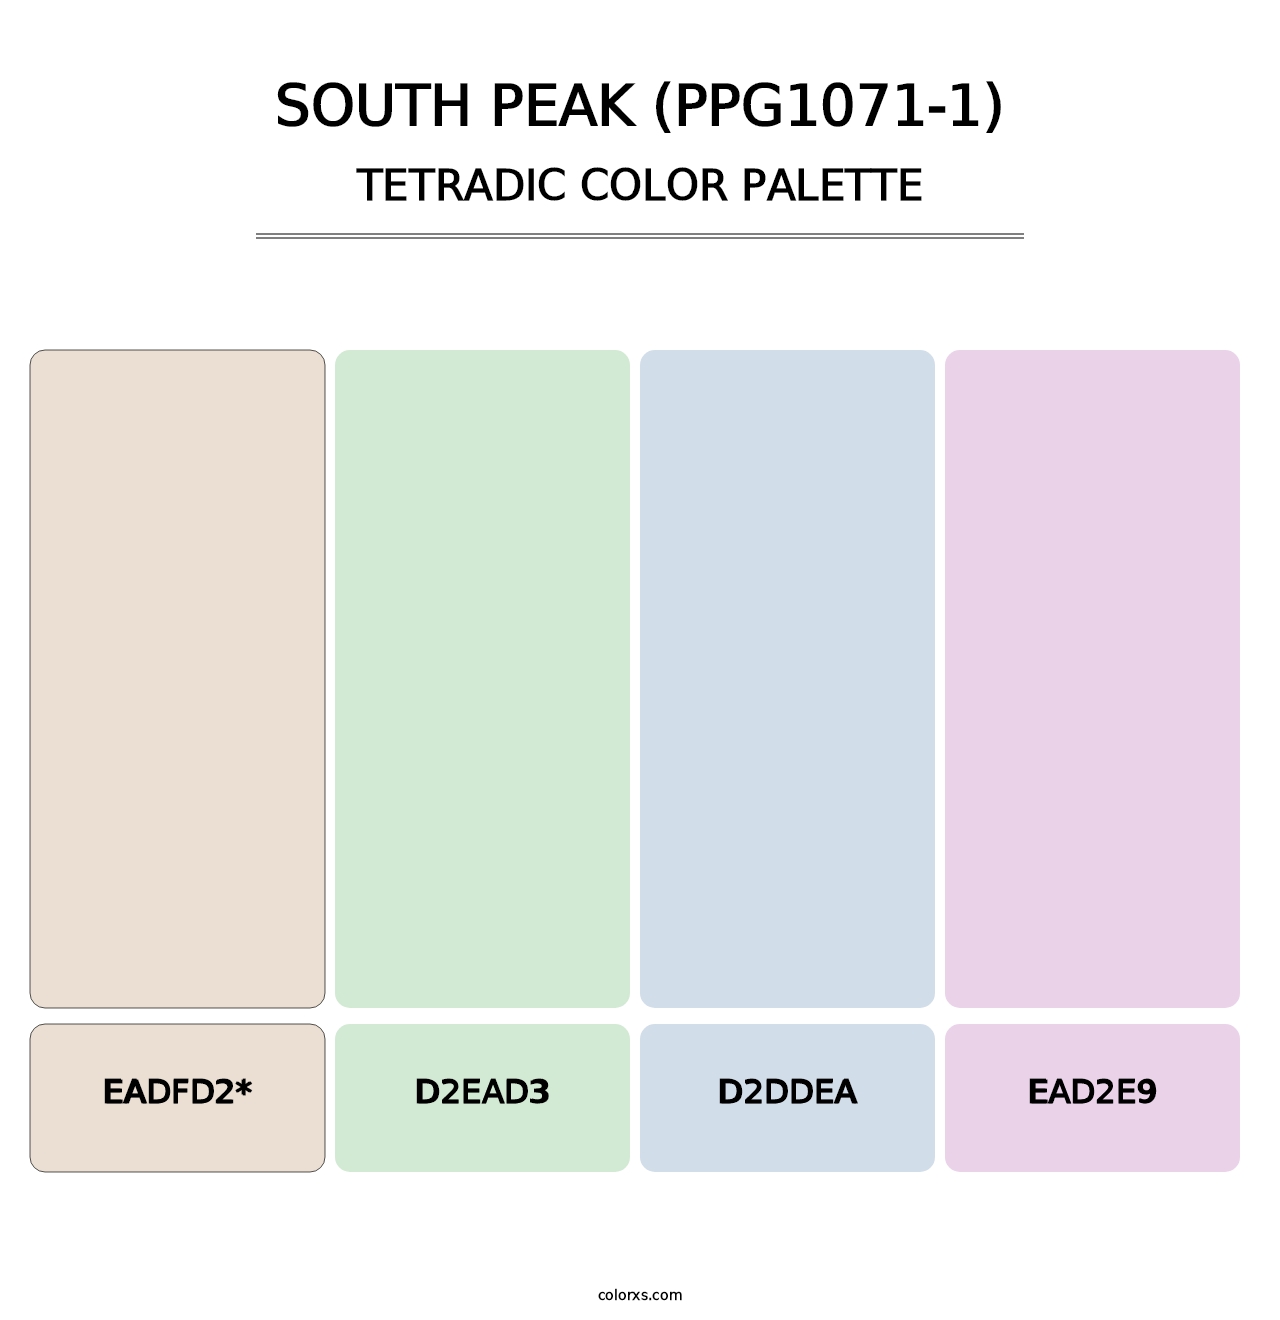 South Peak (PPG1071-1) - Tetradic Color Palette